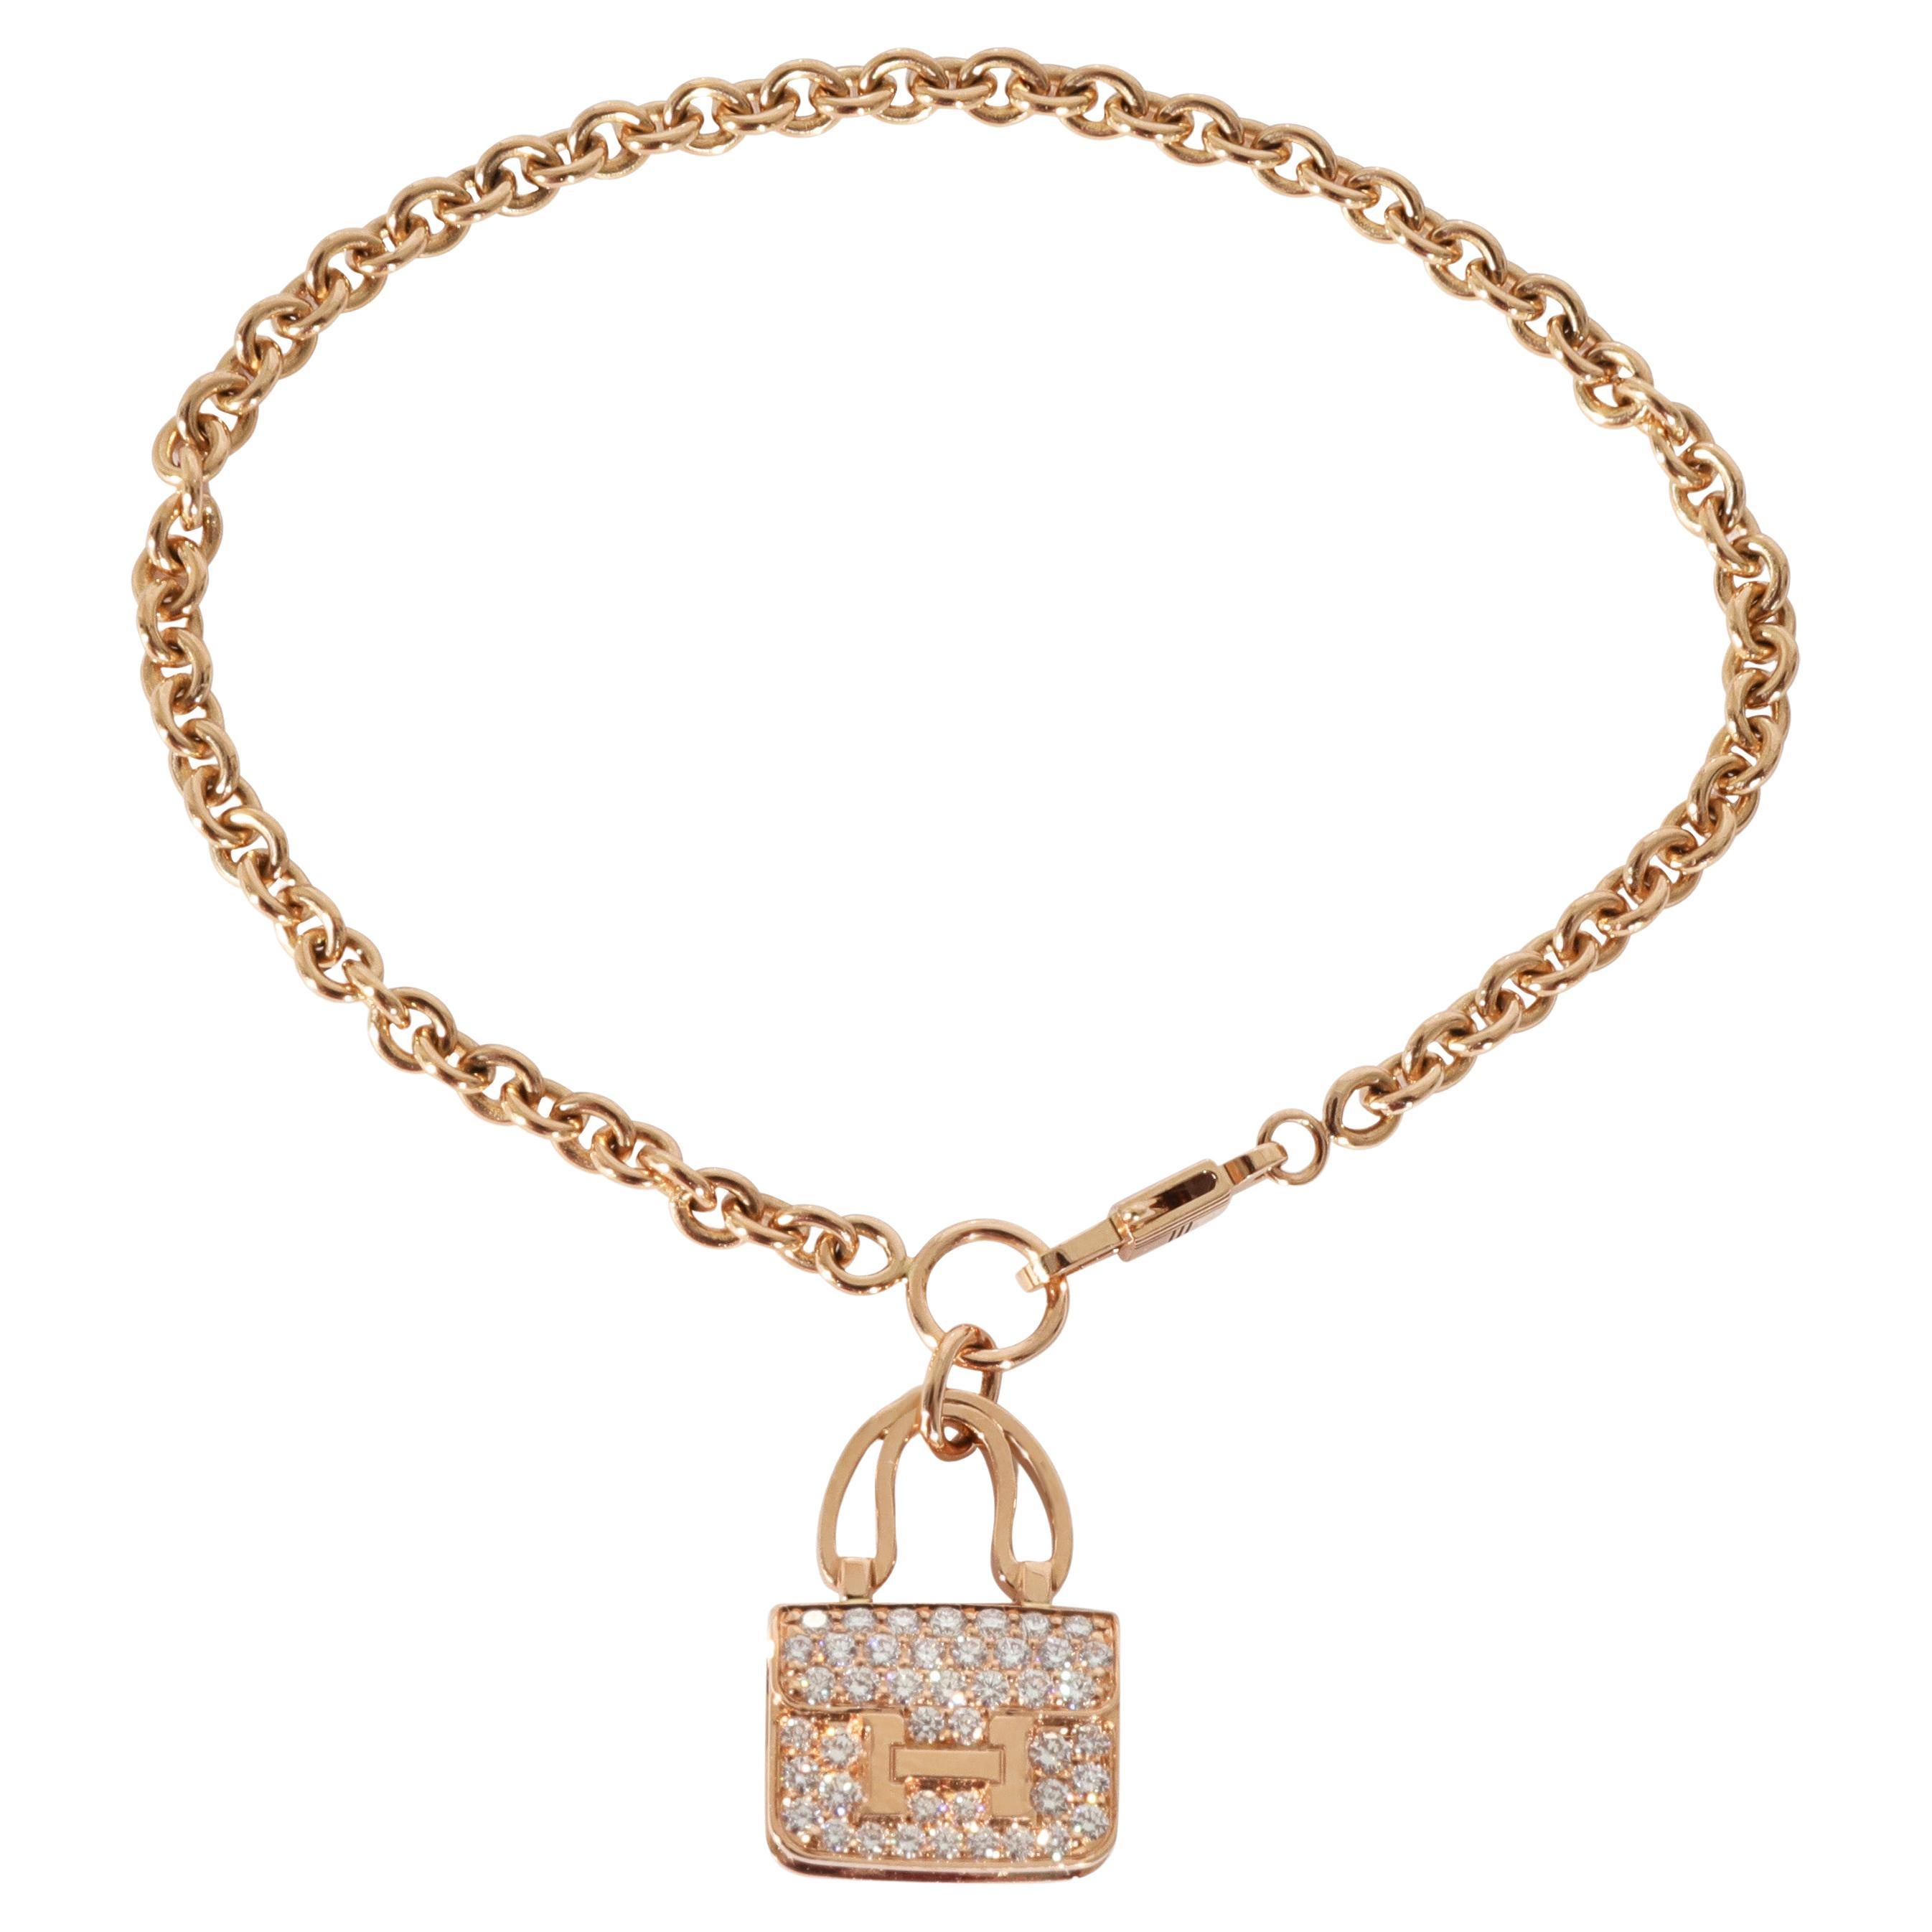 Hermès Amulettes Sammlung Diamant Armband in 18k Rose Gold 0,58 CTW im Angebot